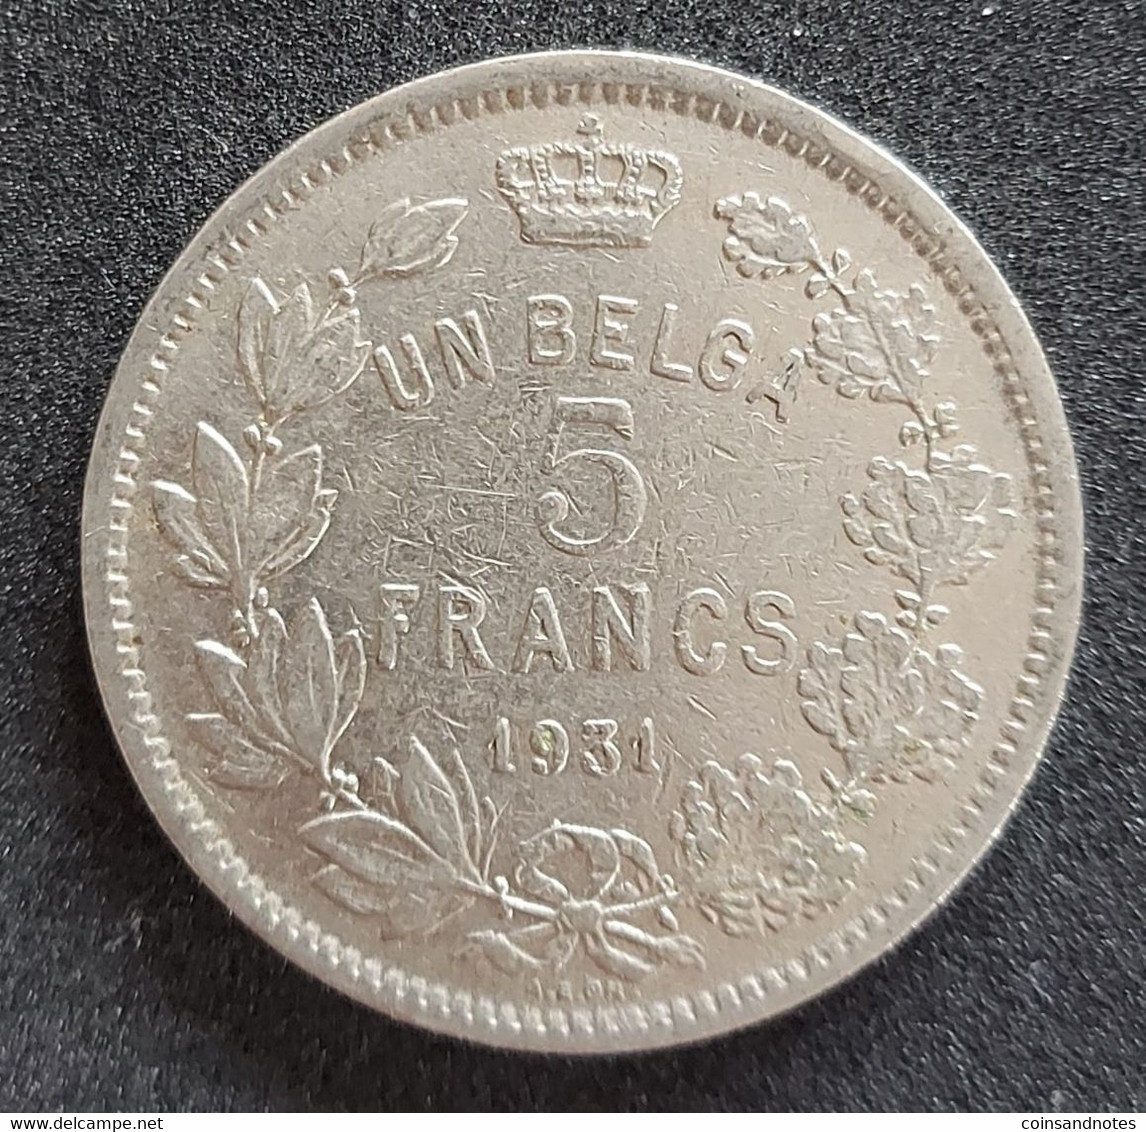 Belgium 1931 - 5 Francs/Un Belga Nikkel FR - Albert I - Morin 384b - Pr - 5 Frank & 1 Belga